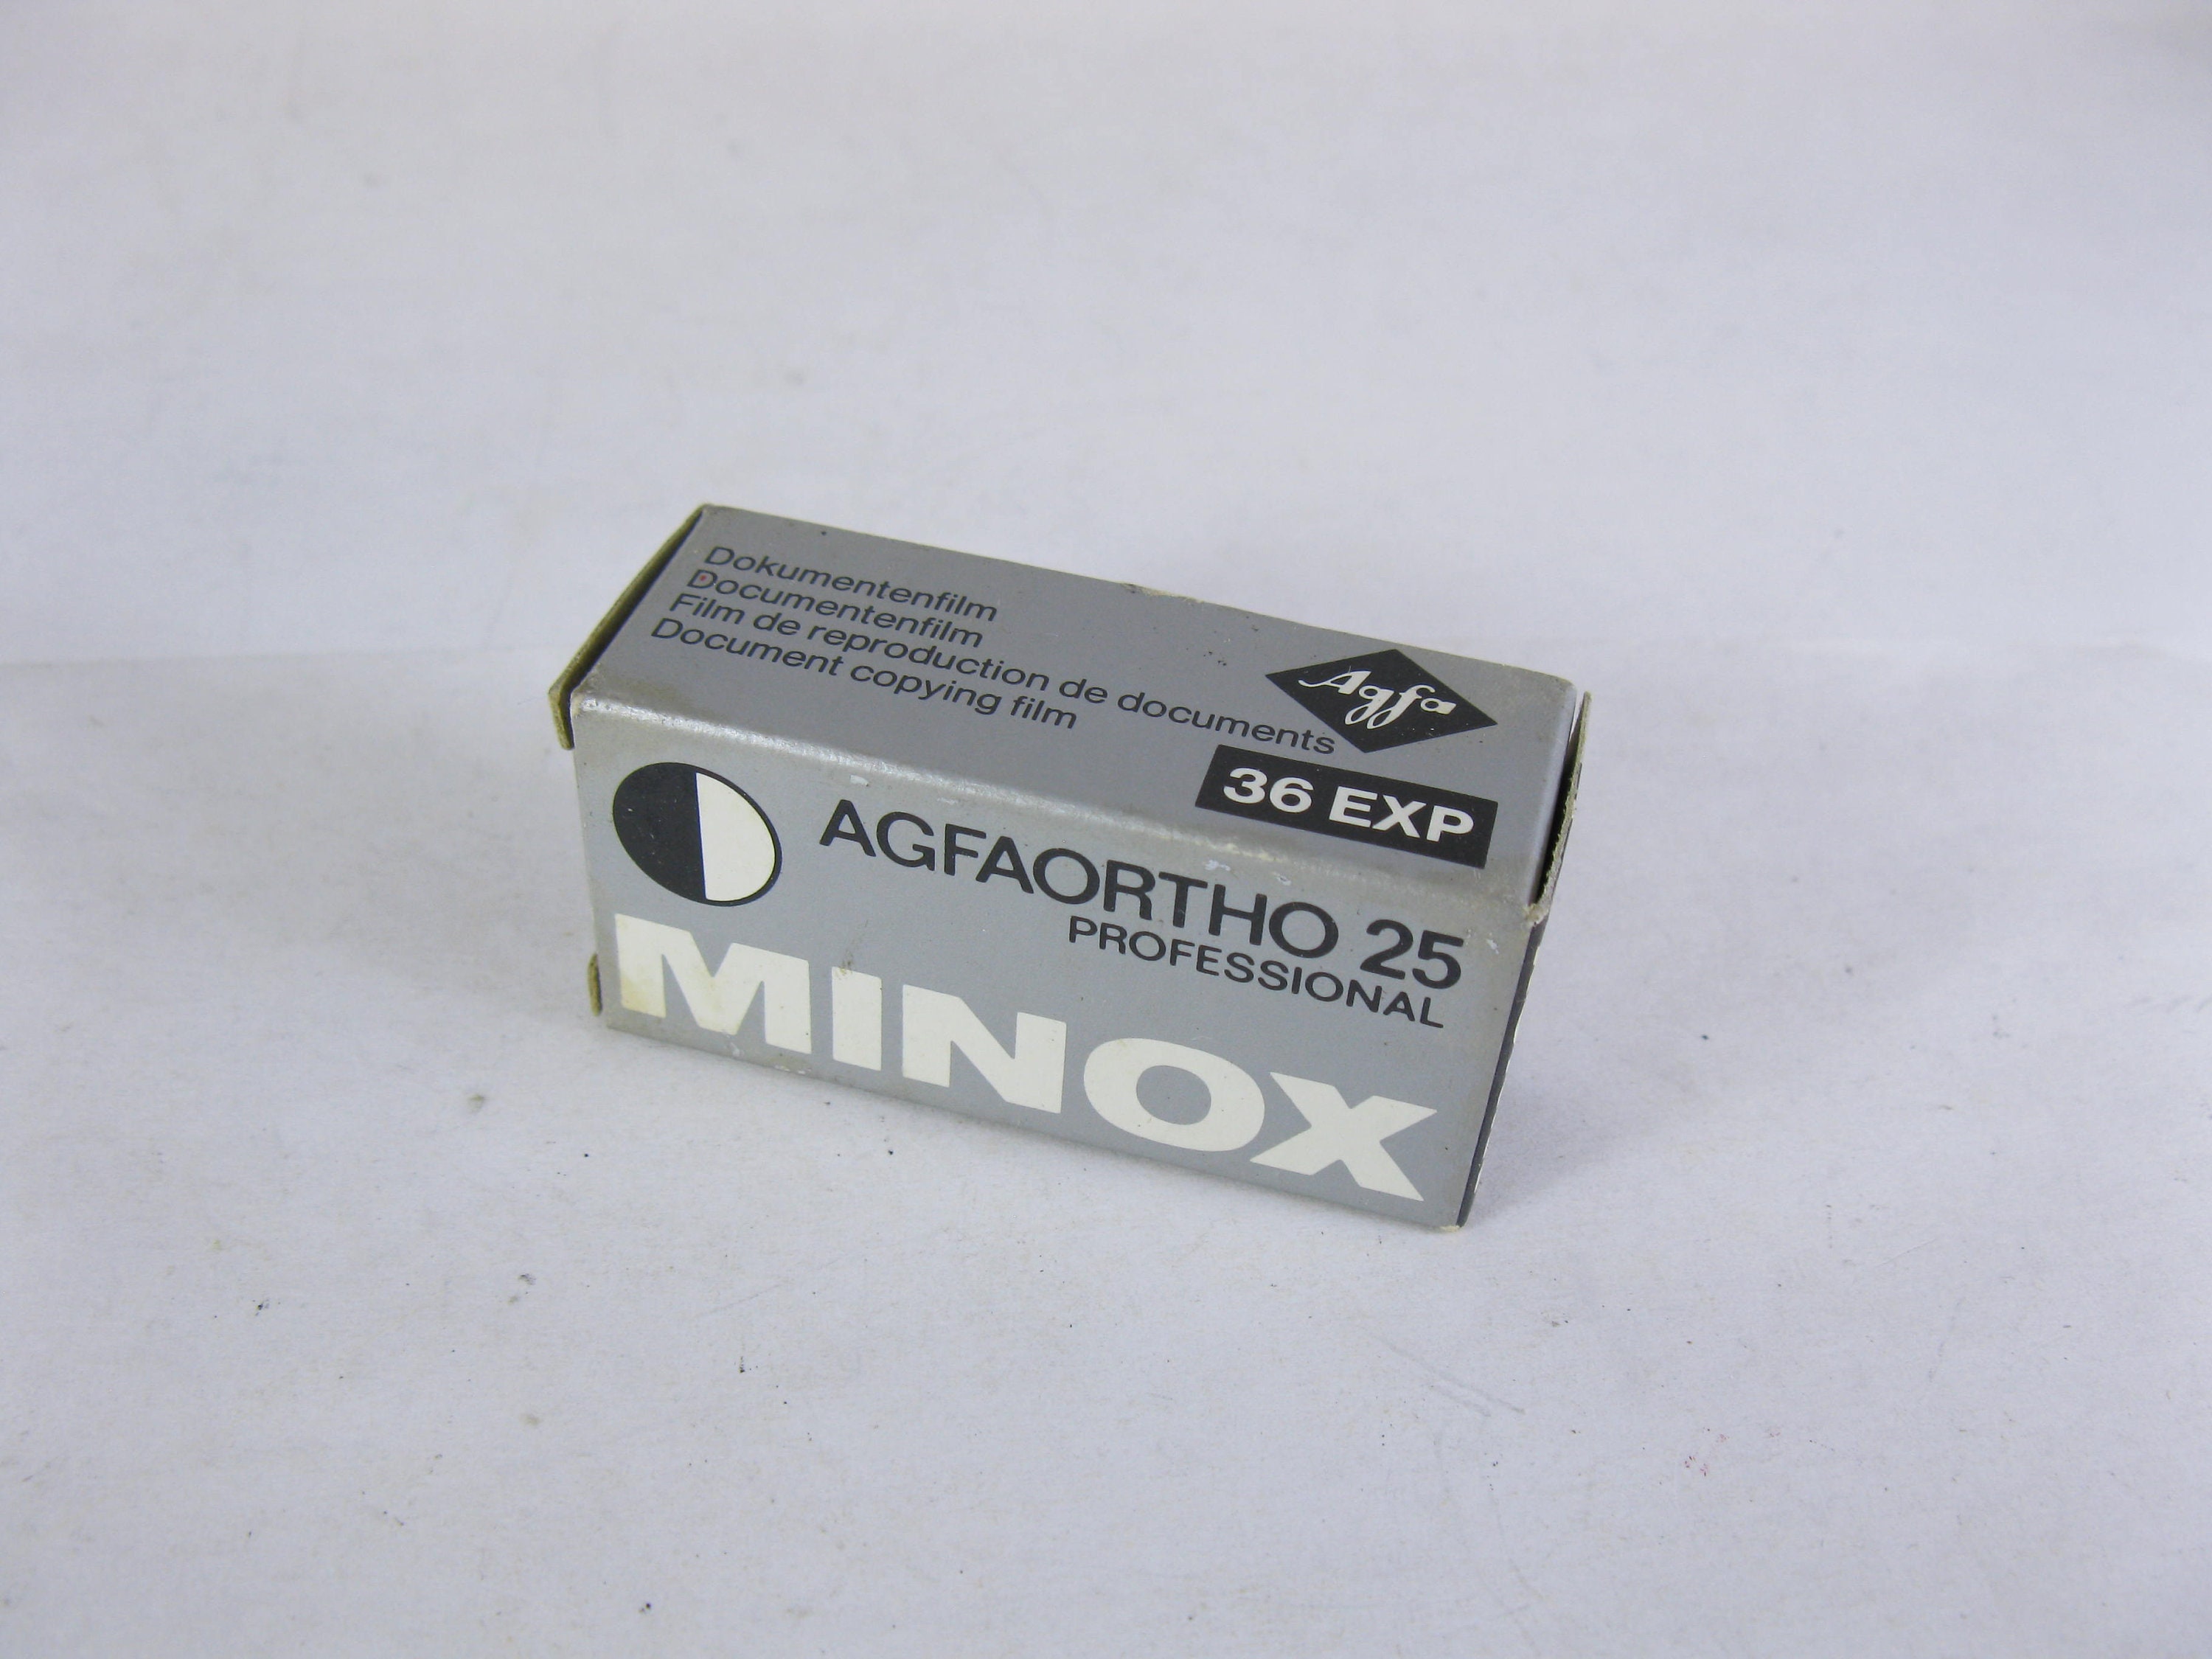 Minox Accessories -  Finland